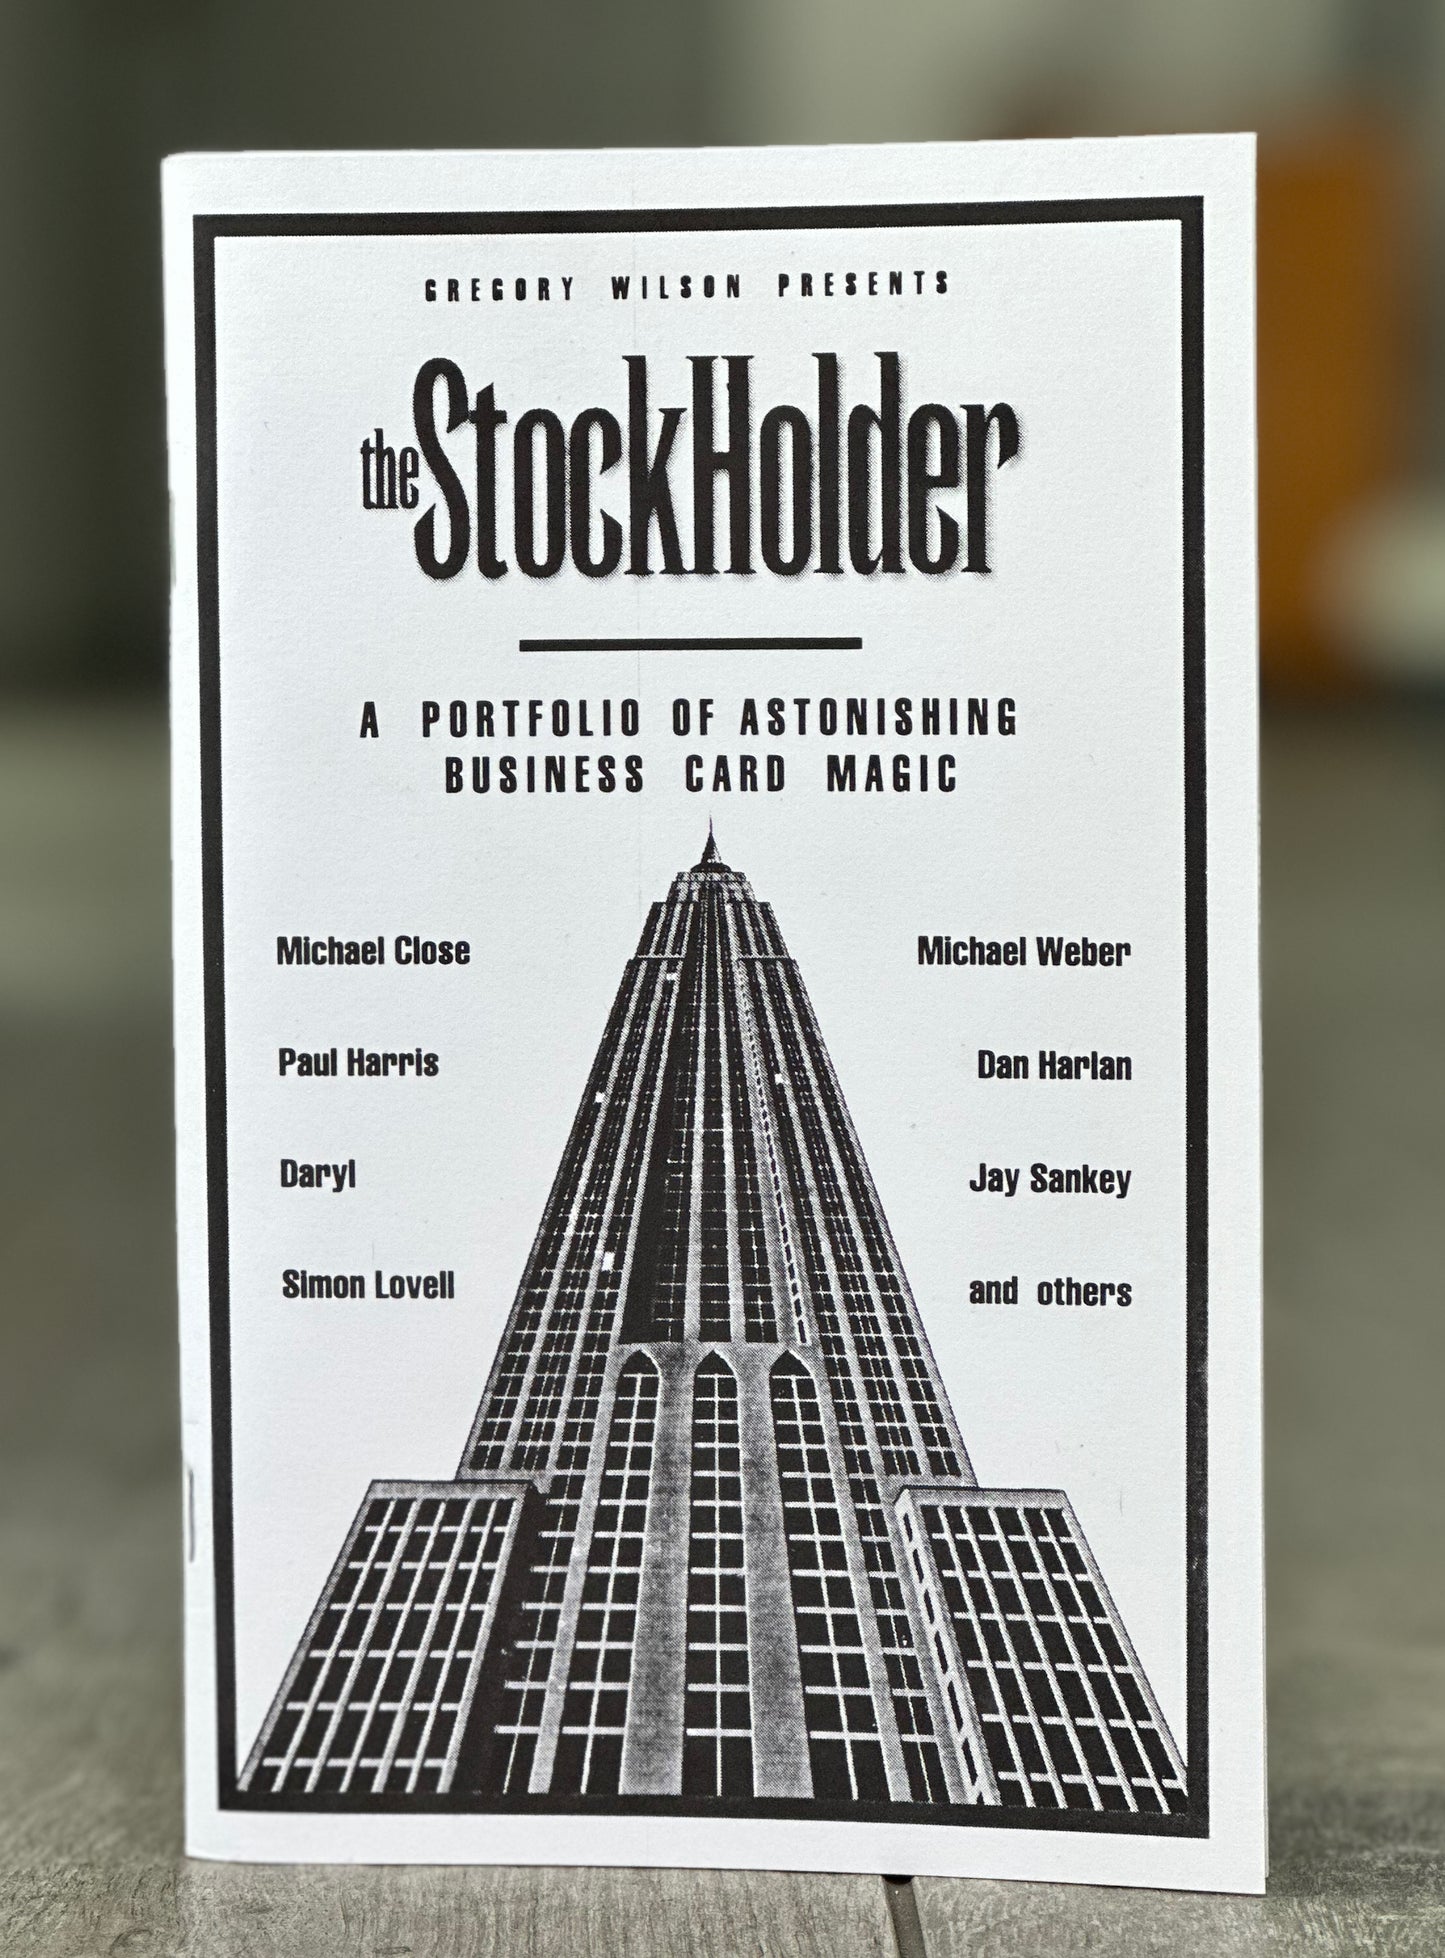 Stockholder by Gregory Wilson